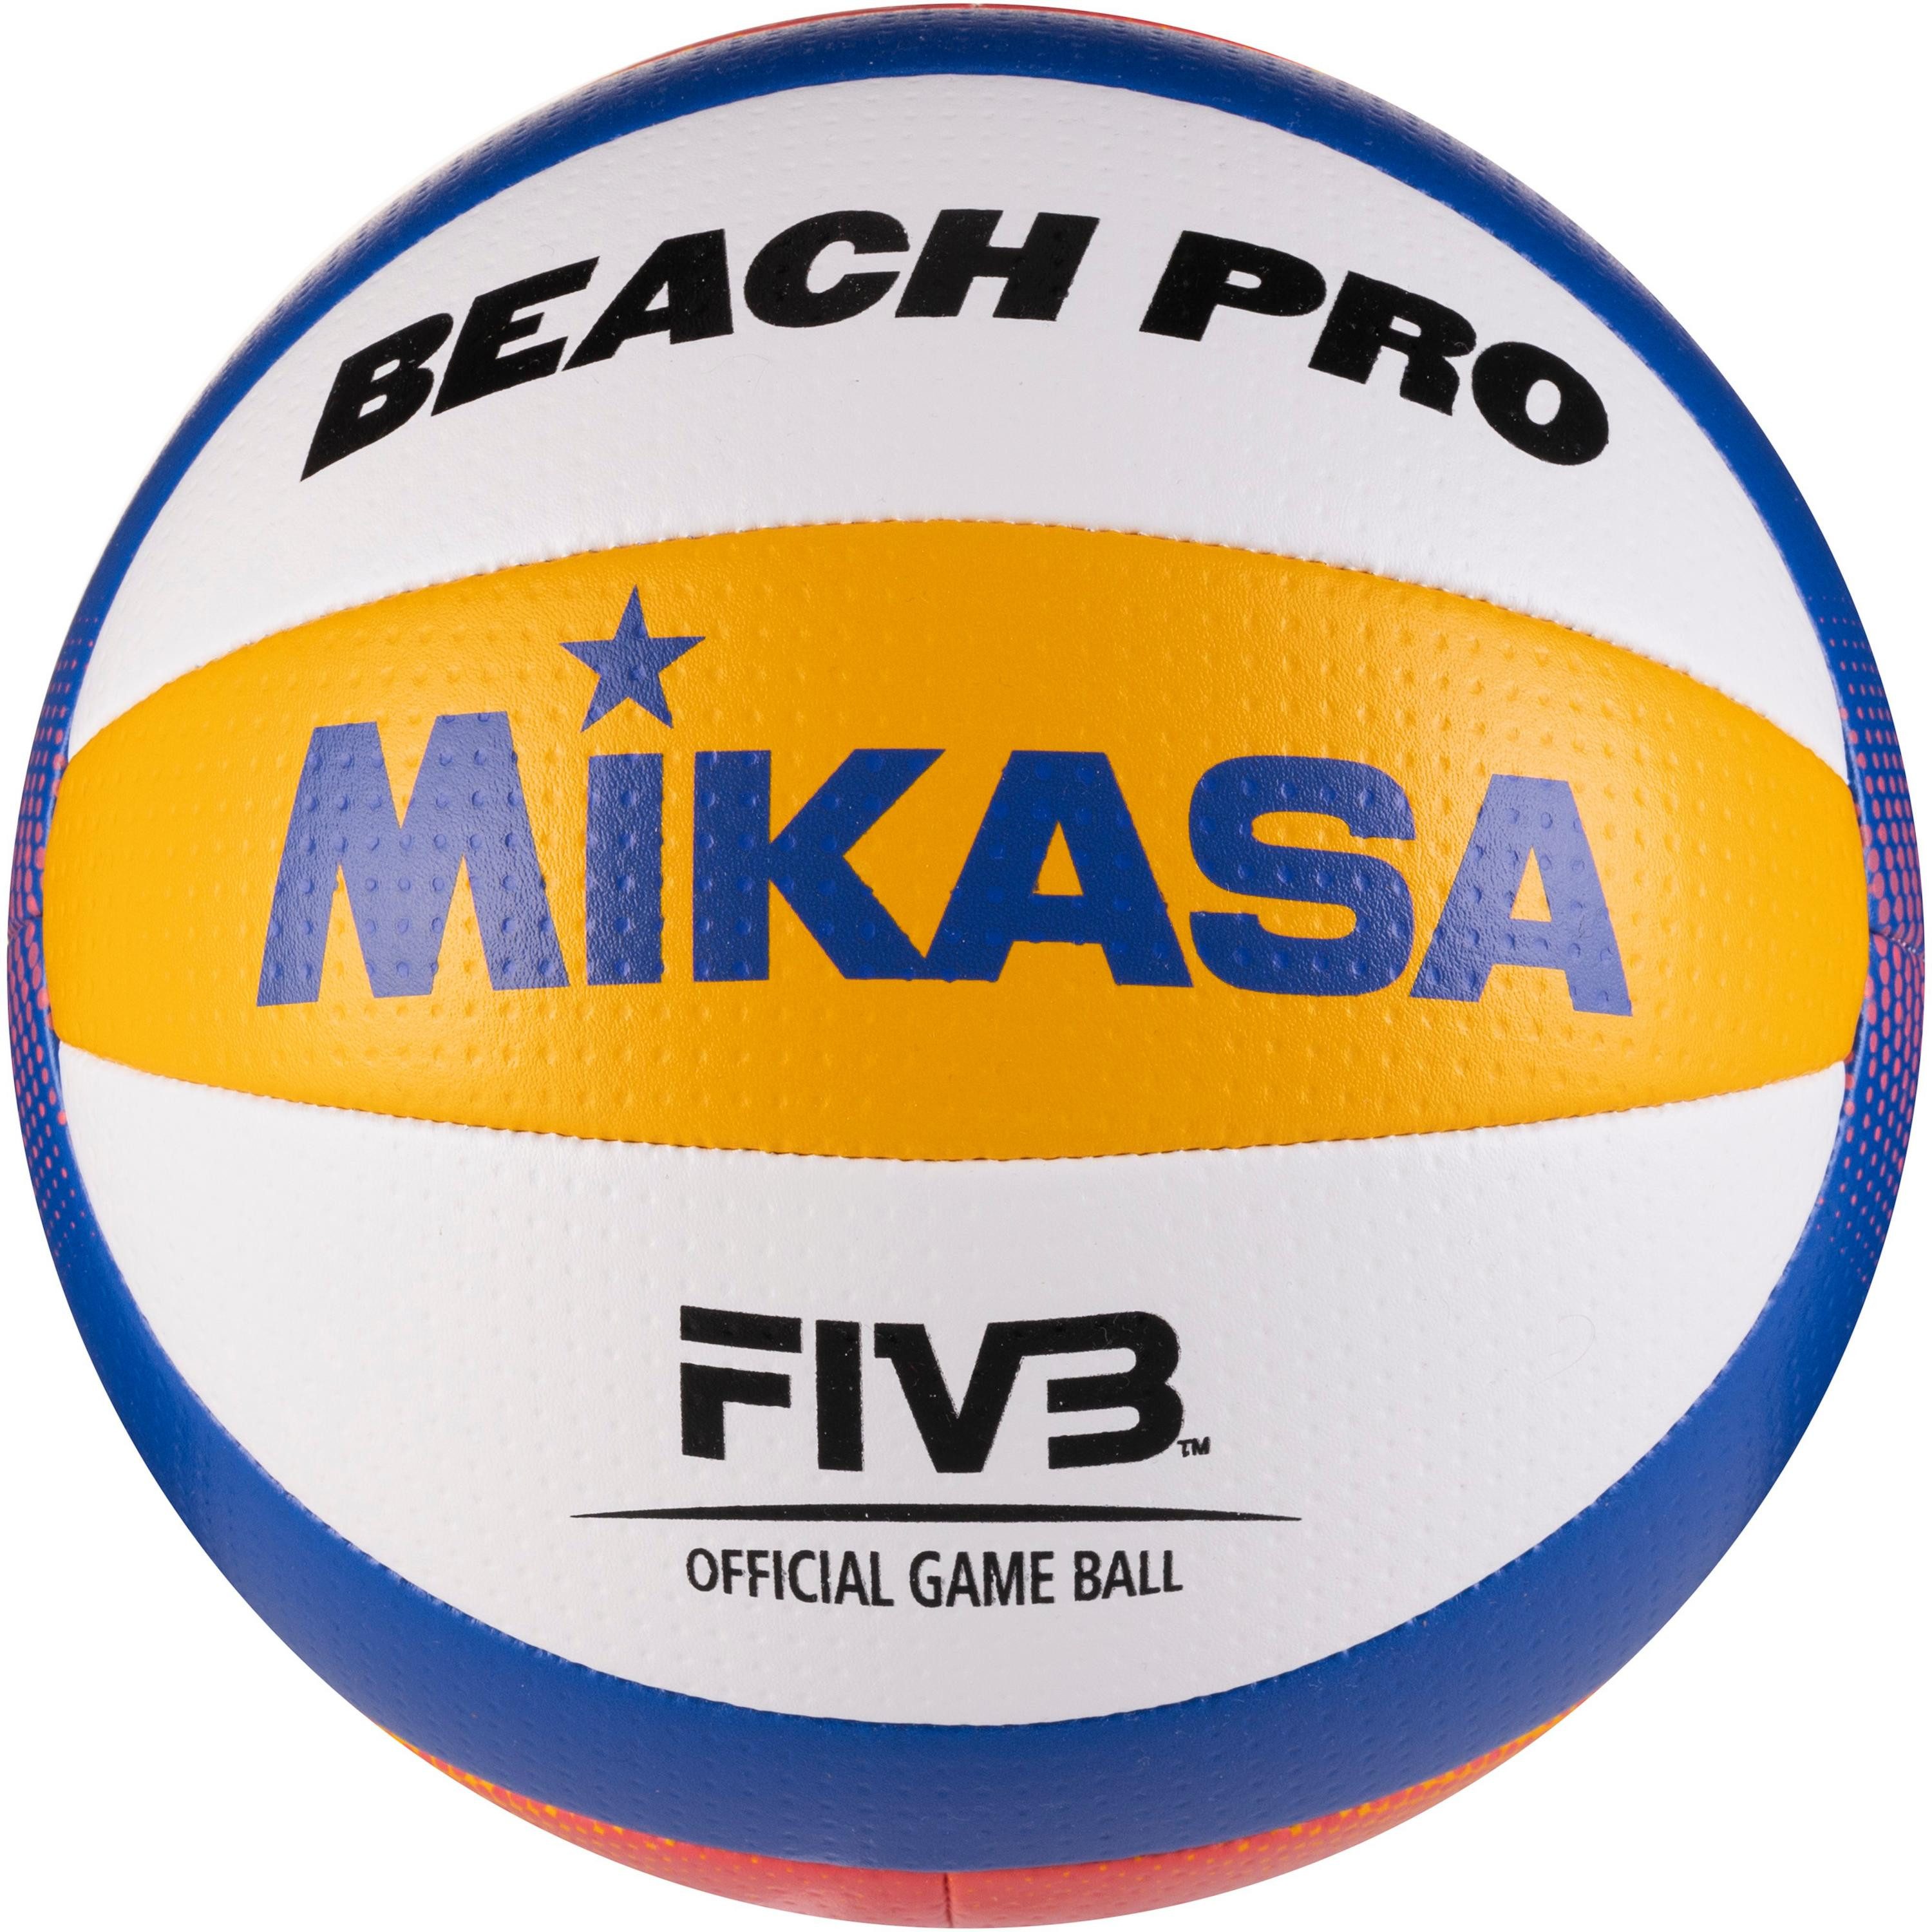 Mikasa Beachvolleyball Beach Pro BV550C